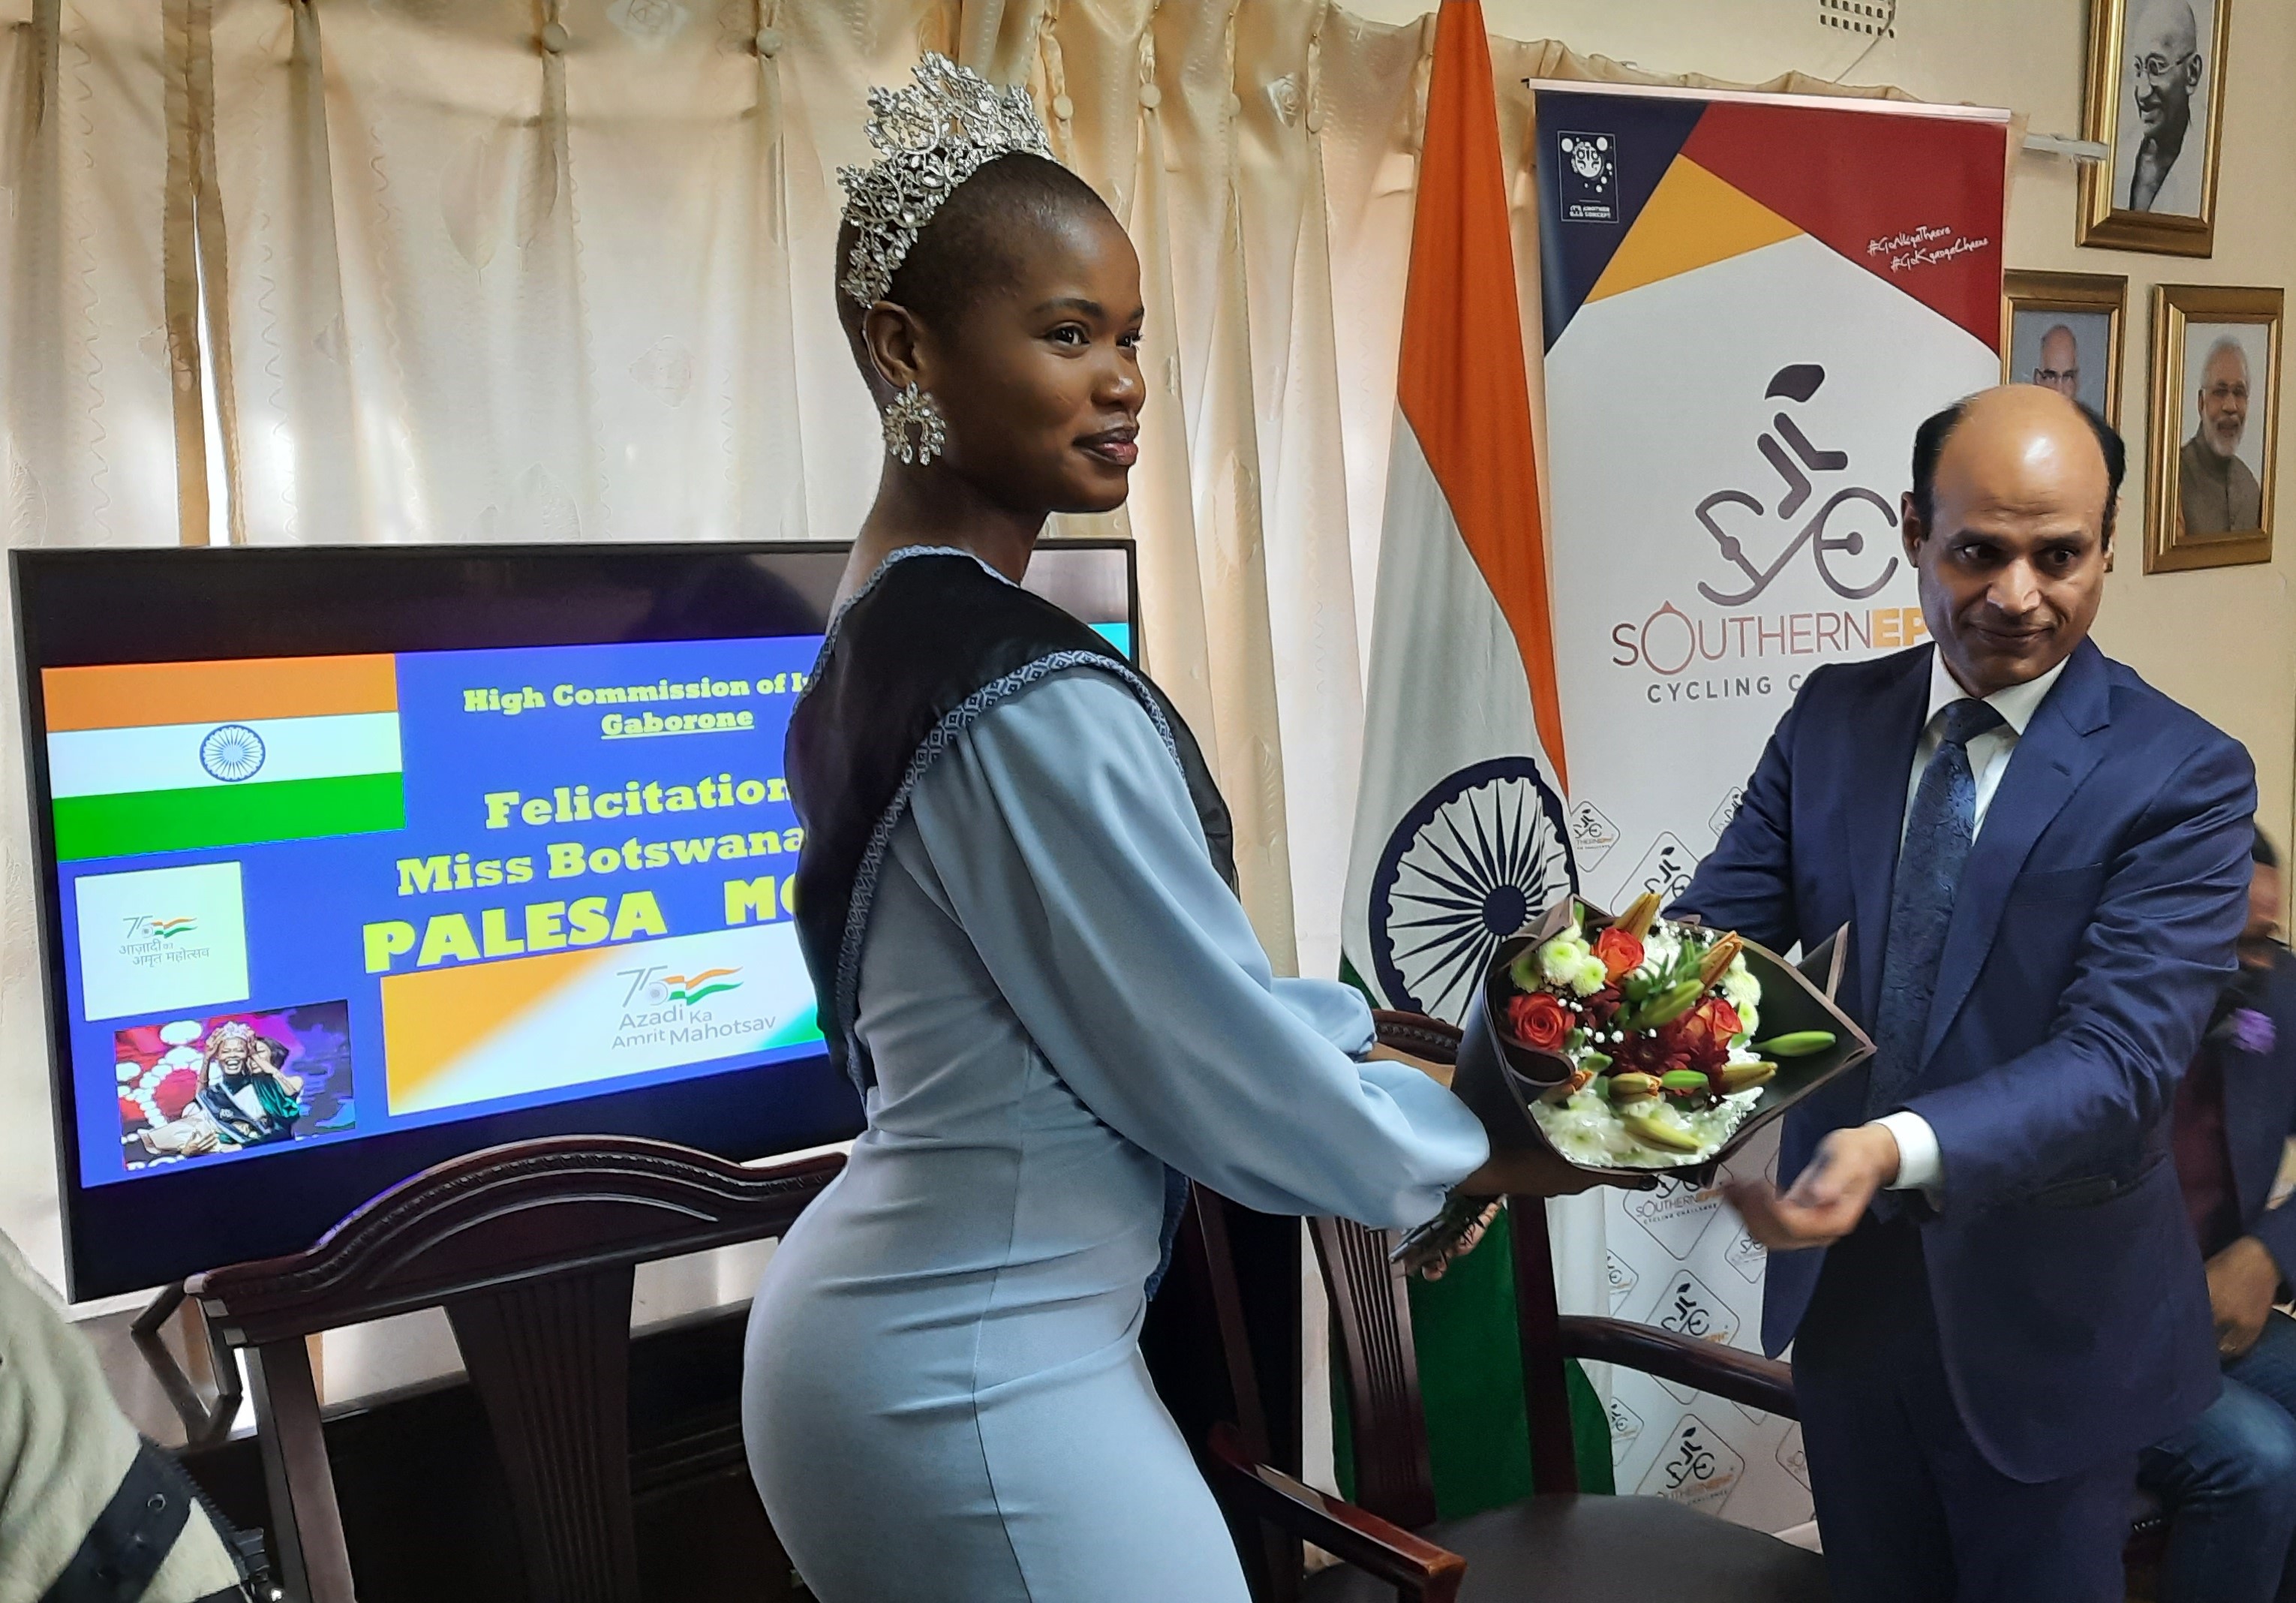 Felicitation of Miss Botswana 2021 Palesa Molefe